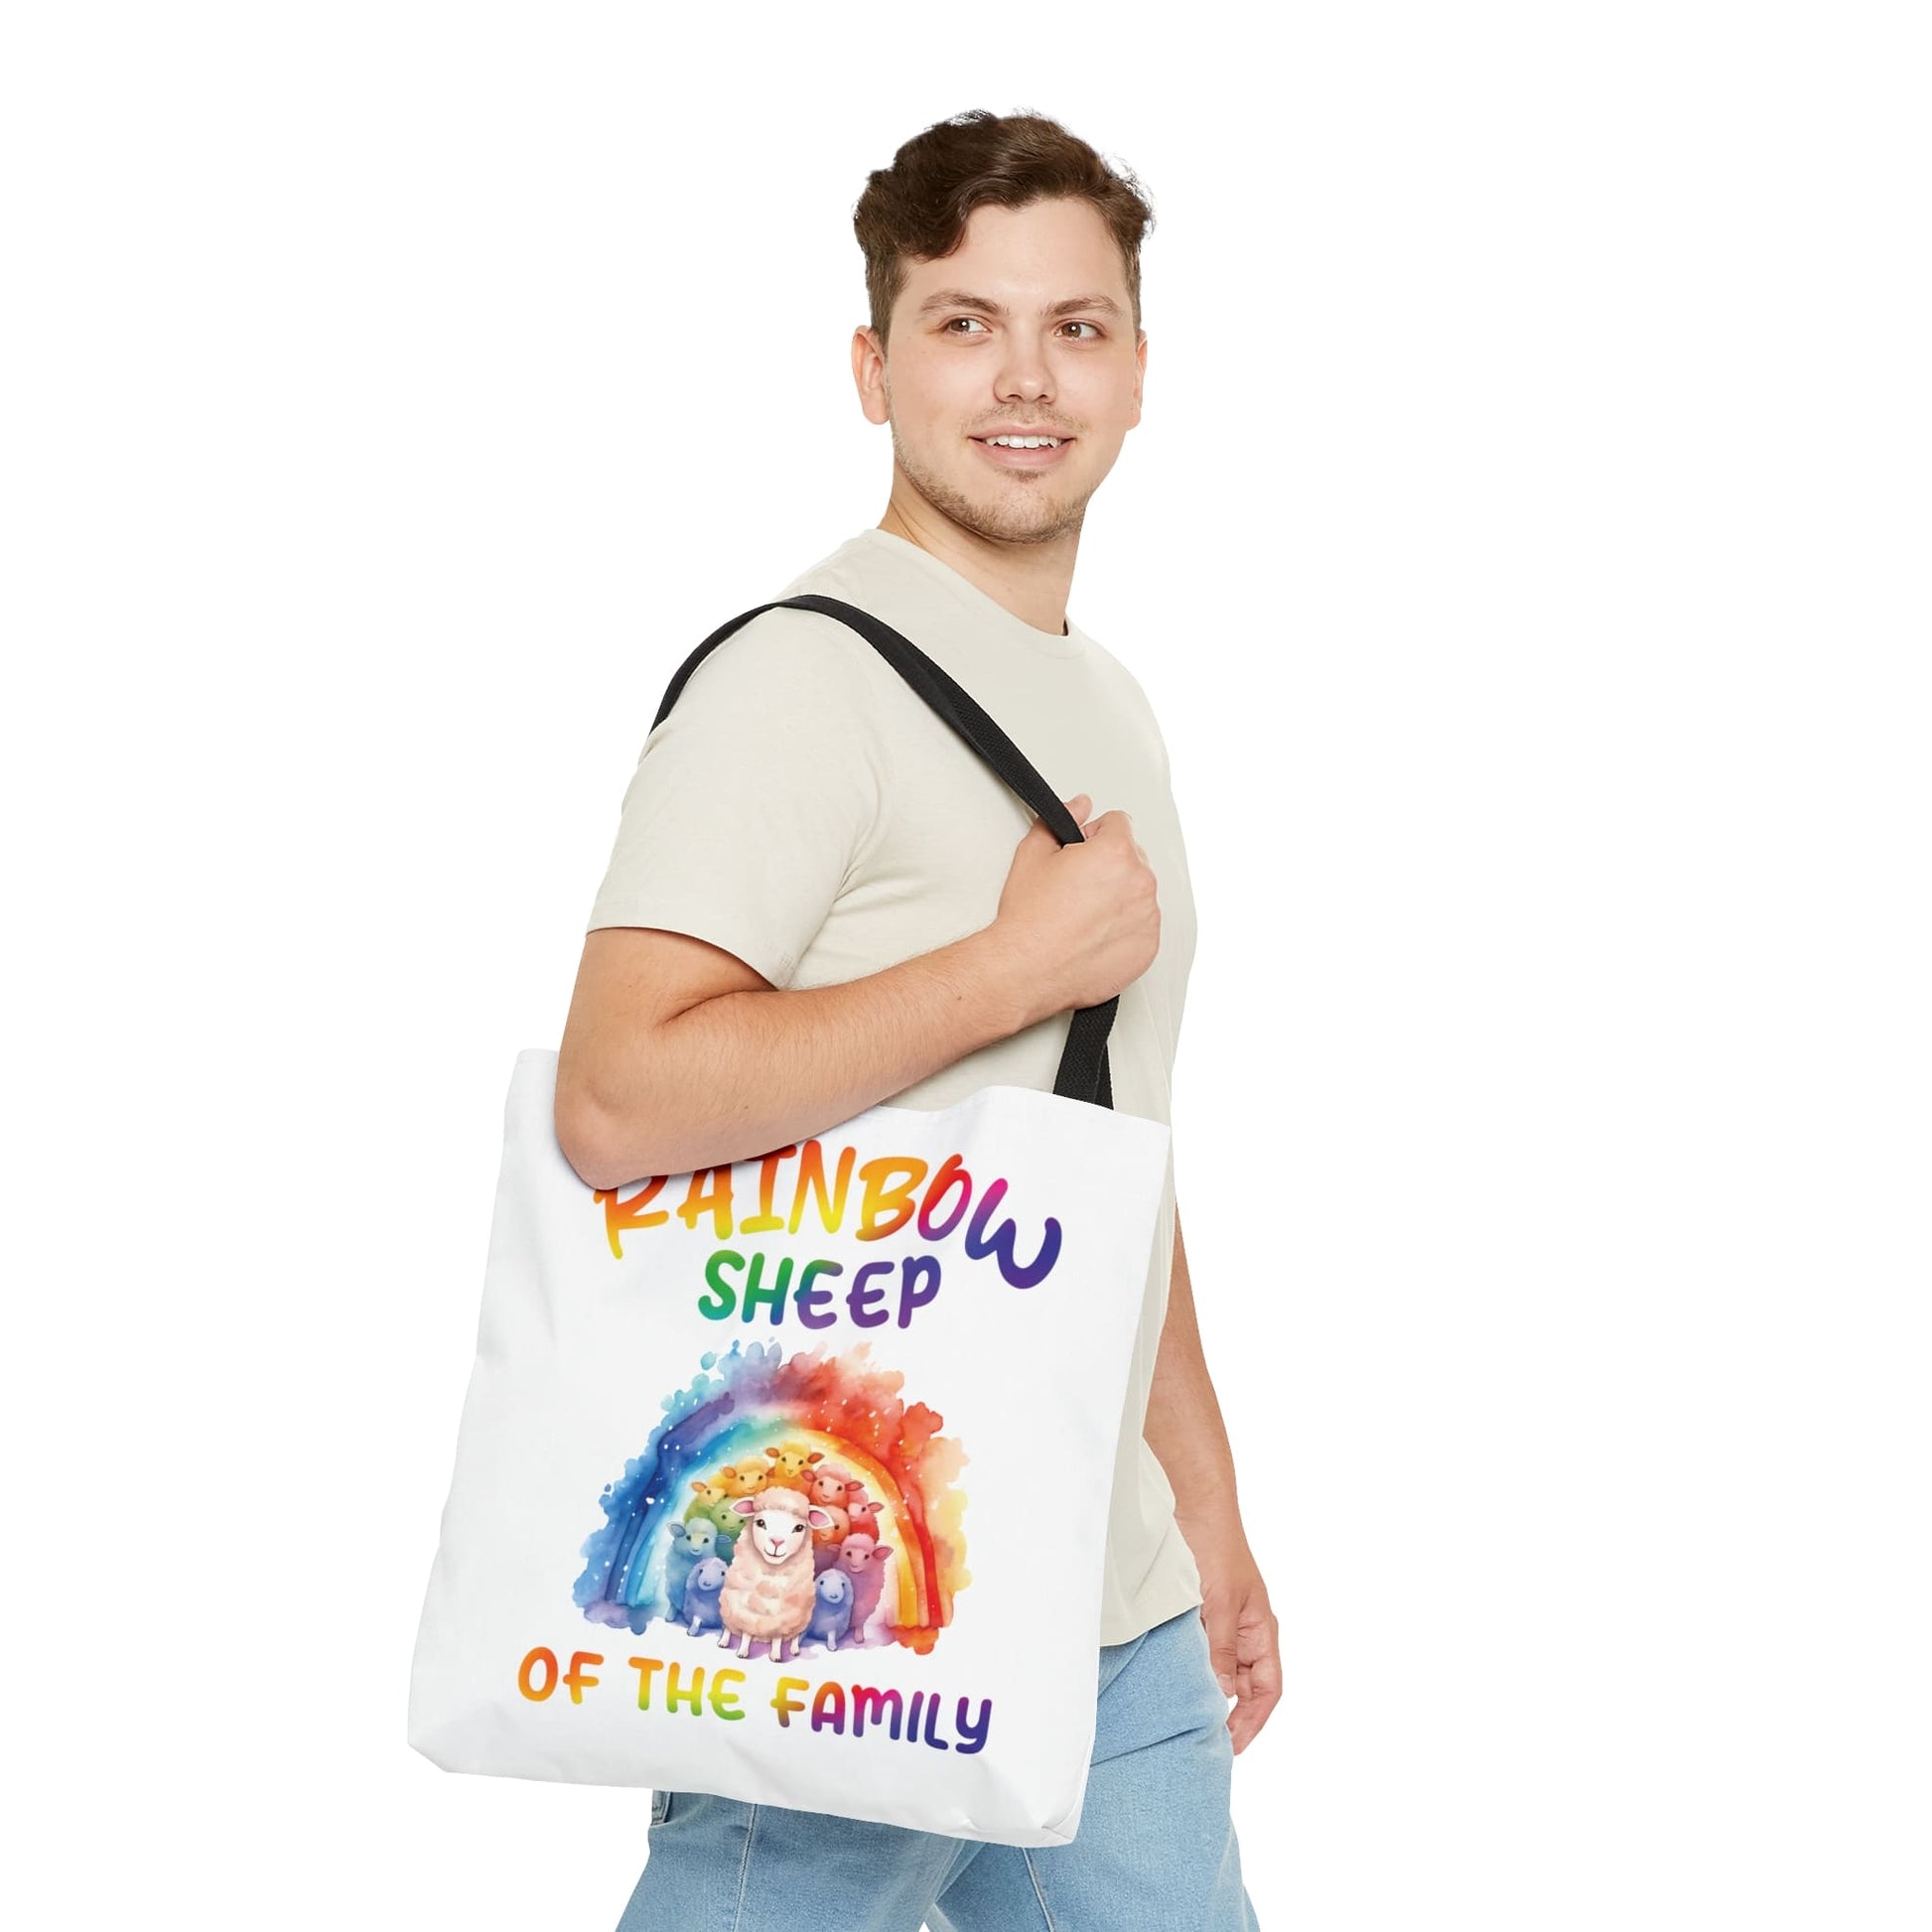 LGBTQ pride tote bag, rainbow sheep of the family bag, large